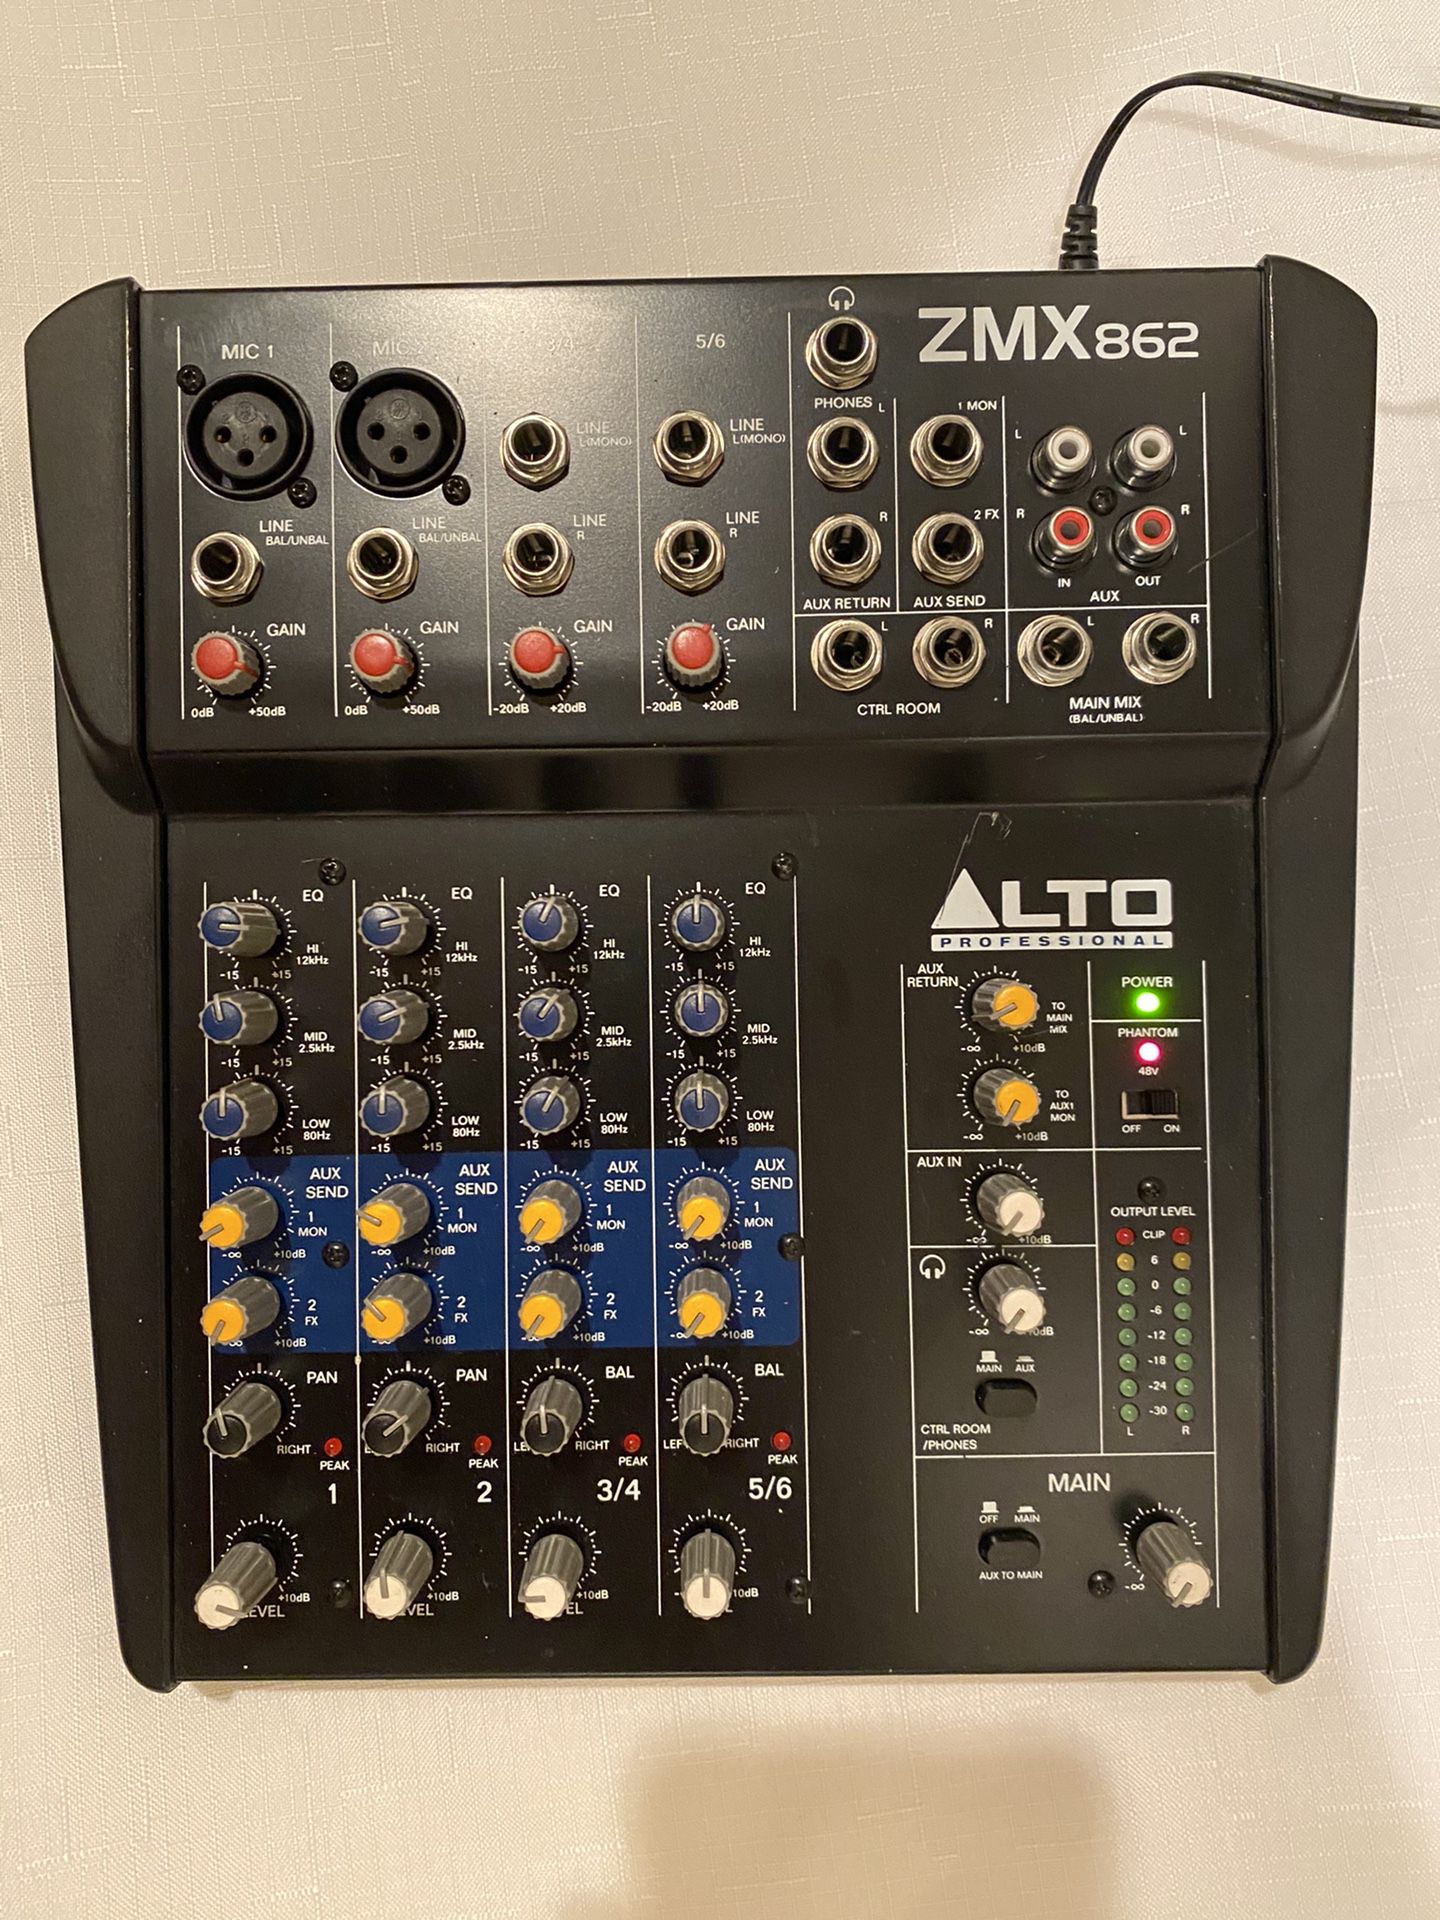 ALTO ZMX 862 Professional Mixer 6 Channel